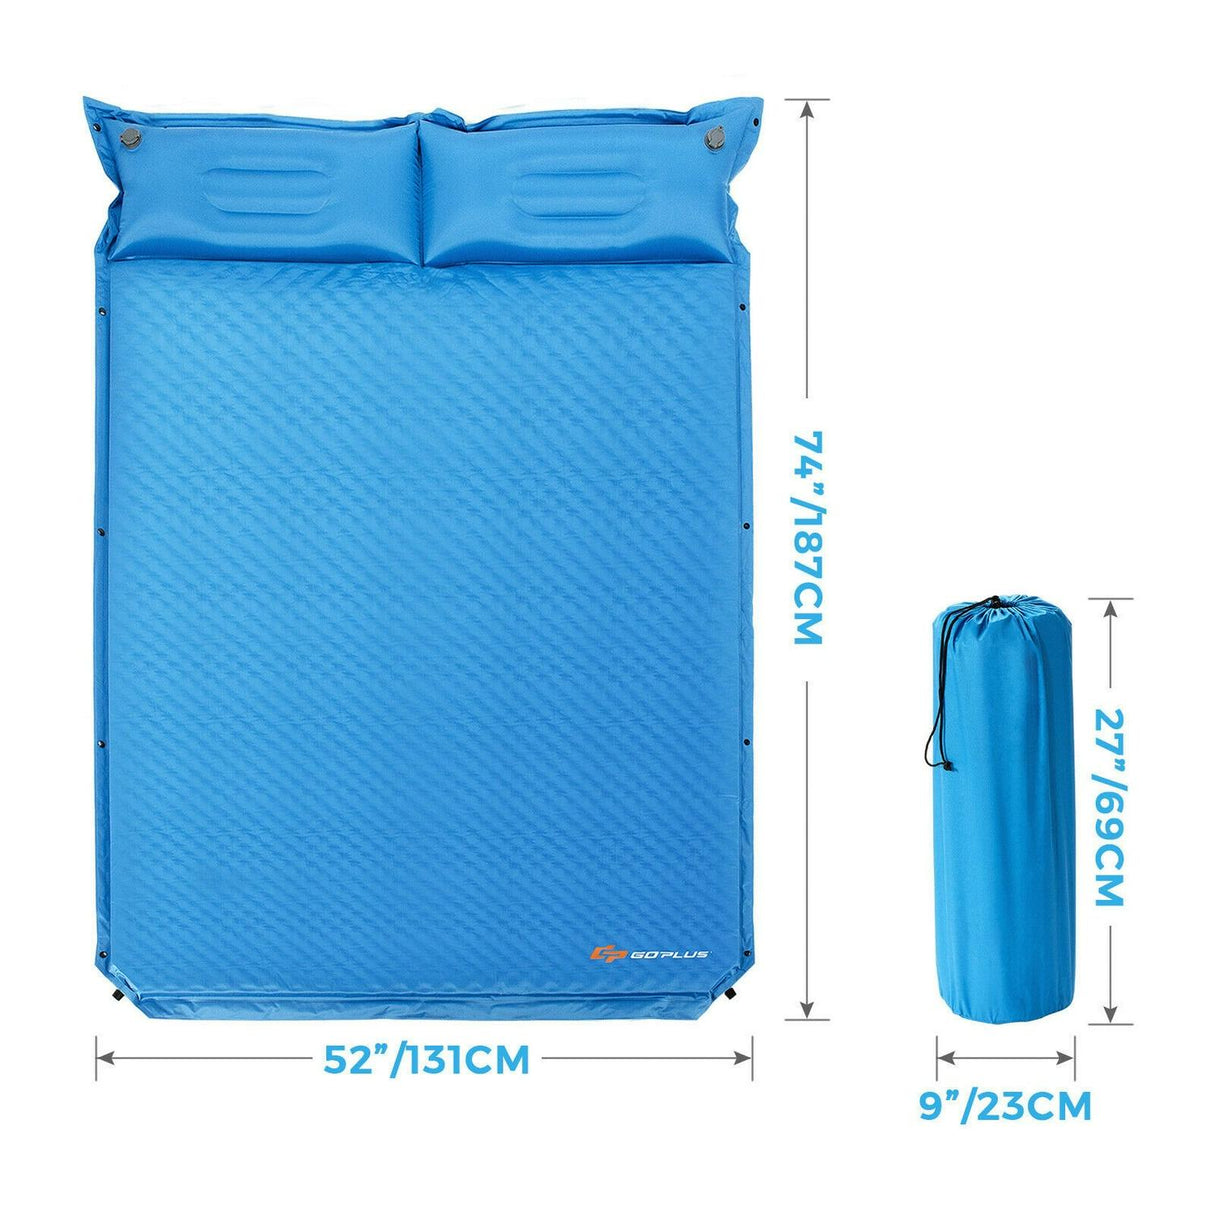 Self-Inflating Camping Outdoor Sleeping Mat with Pillows Bag